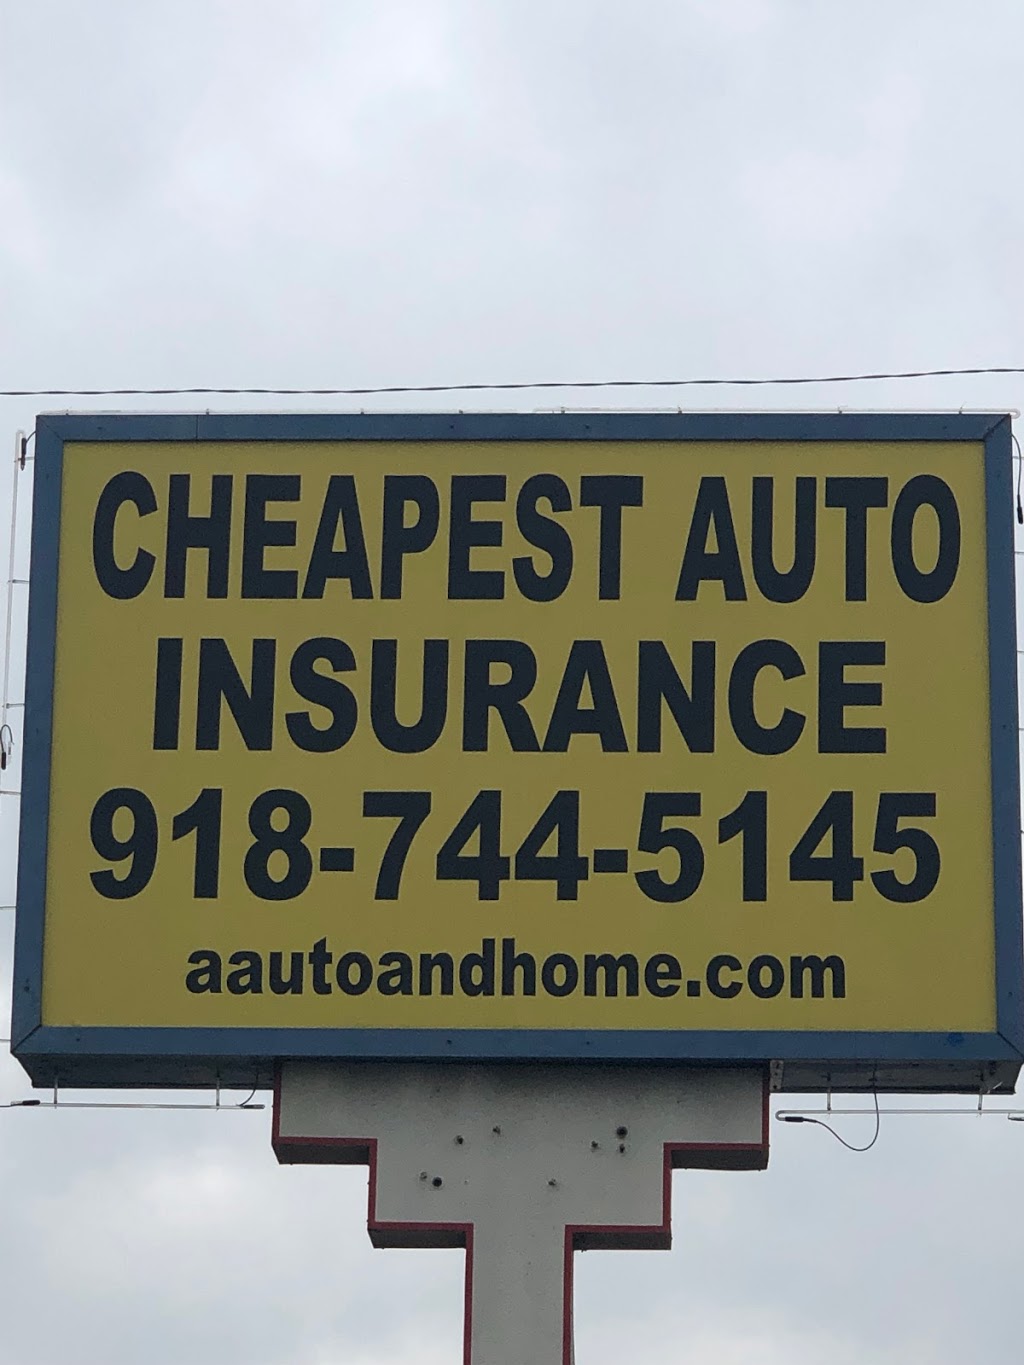 Cheapest Auto Insurance Tulsa Ok Cheapest Car Insurance In Oklahoma For 2021 cy2204imageculture